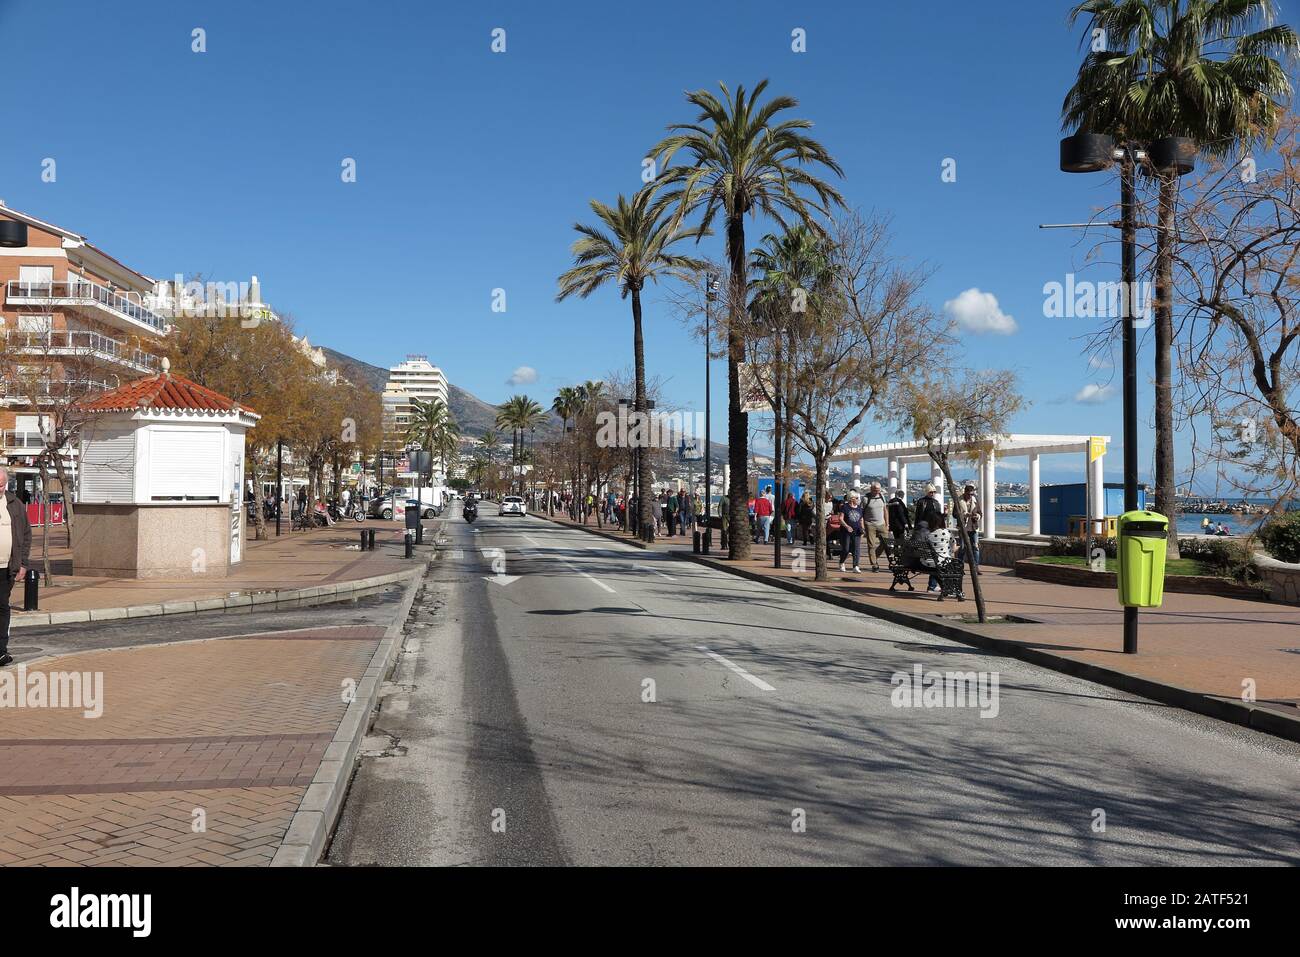 Paseo Marítimo Rey de España, seafront, promenade area, Fuengirola, Costa del Sol, Spain Stock Photo